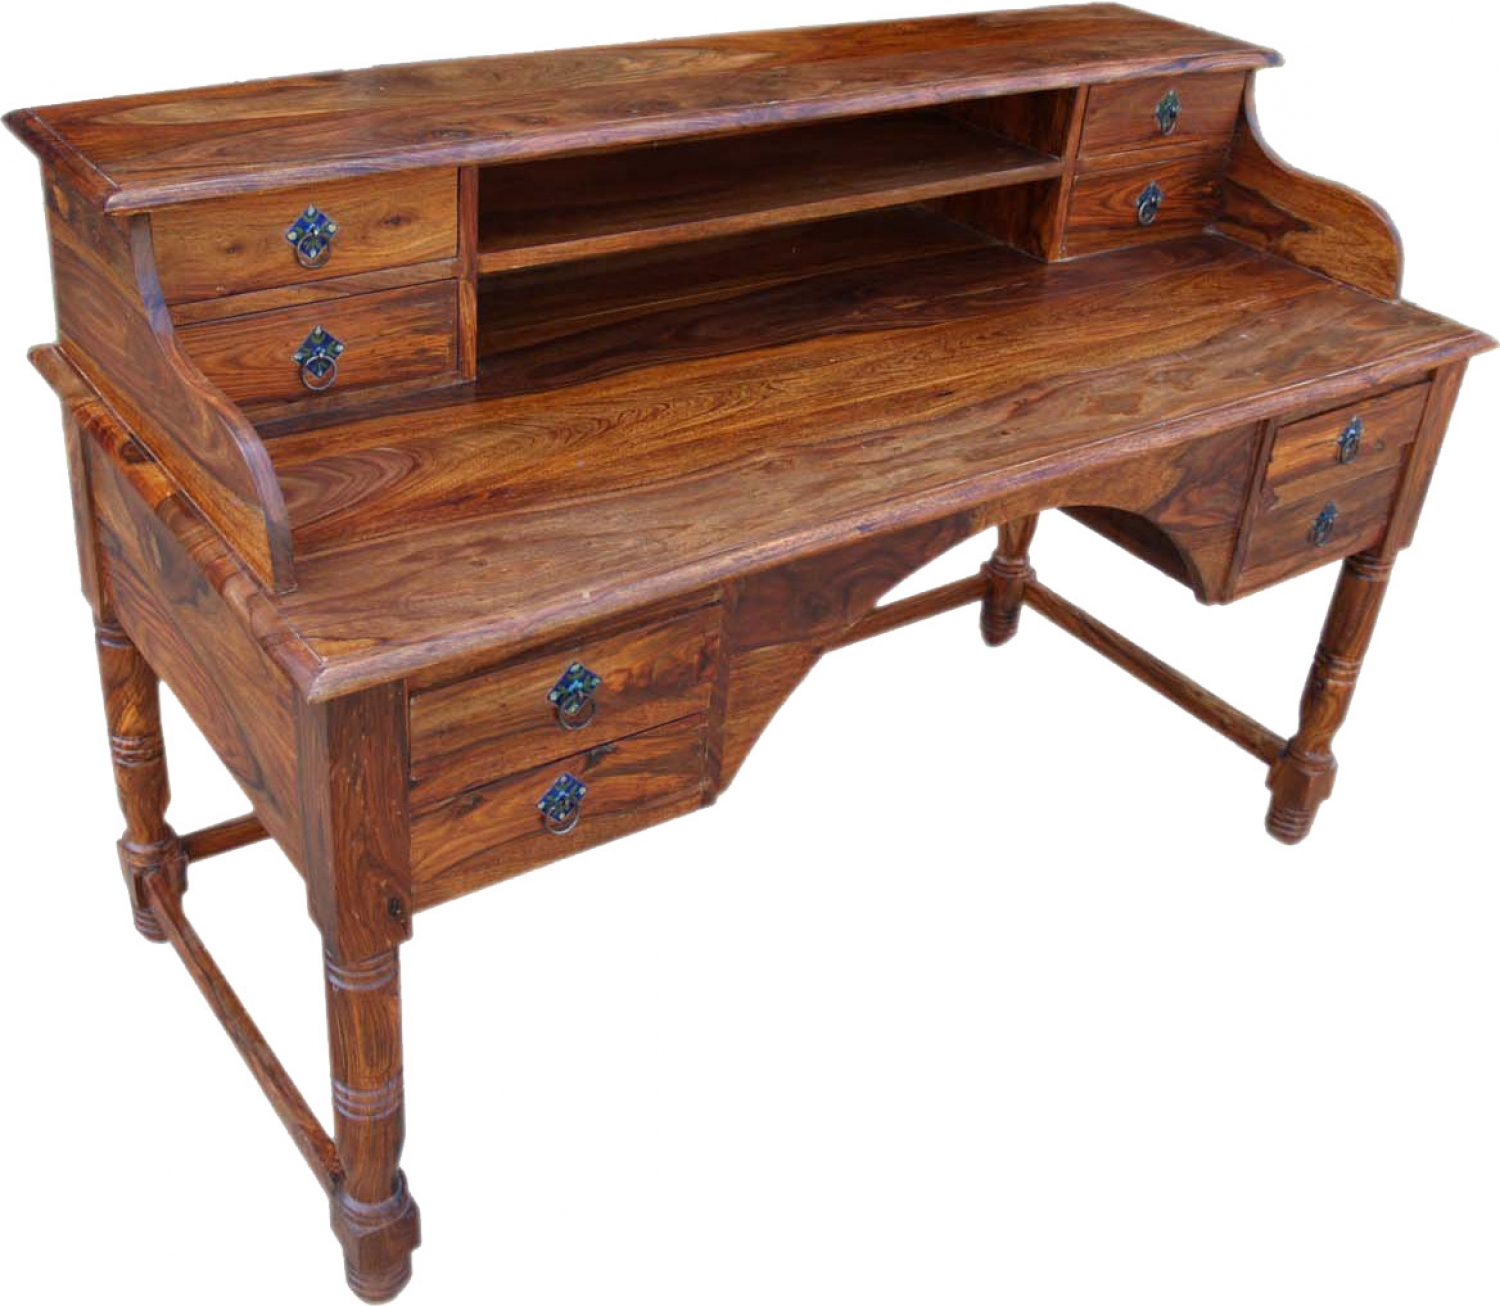 Colonial Style Desk 150 Cm Wide Model 6 100x150x70 Cm